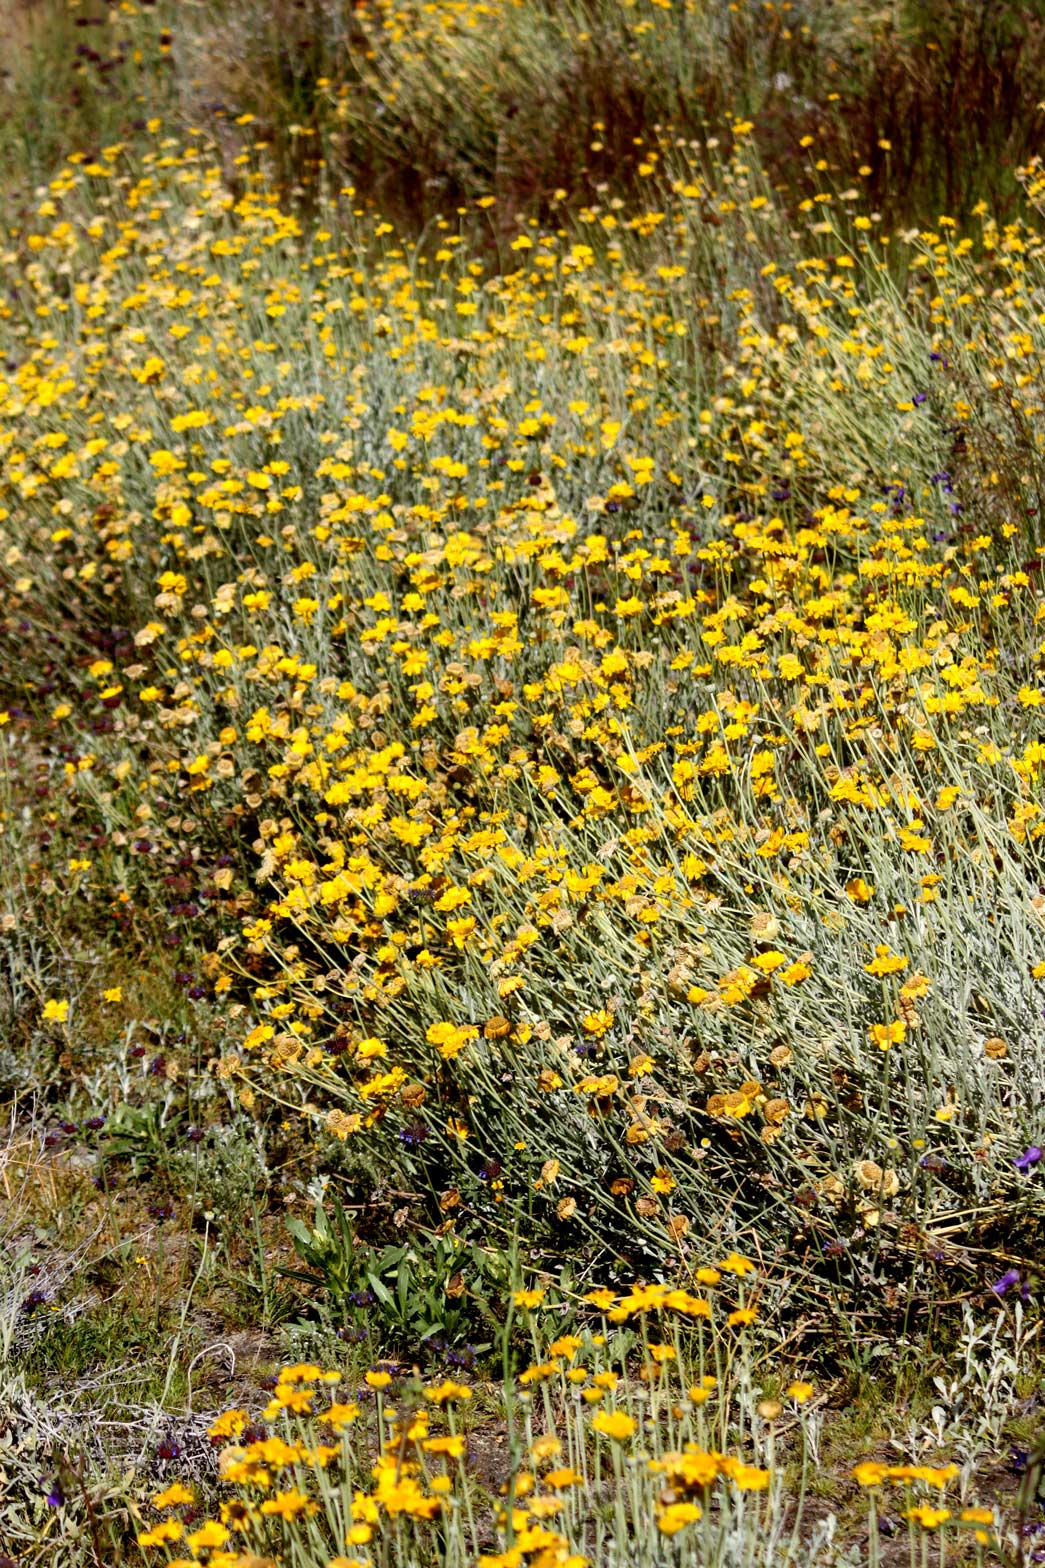 Desert Marigold blooms in the Wildflower Field at Sunnylands Center and Gardens